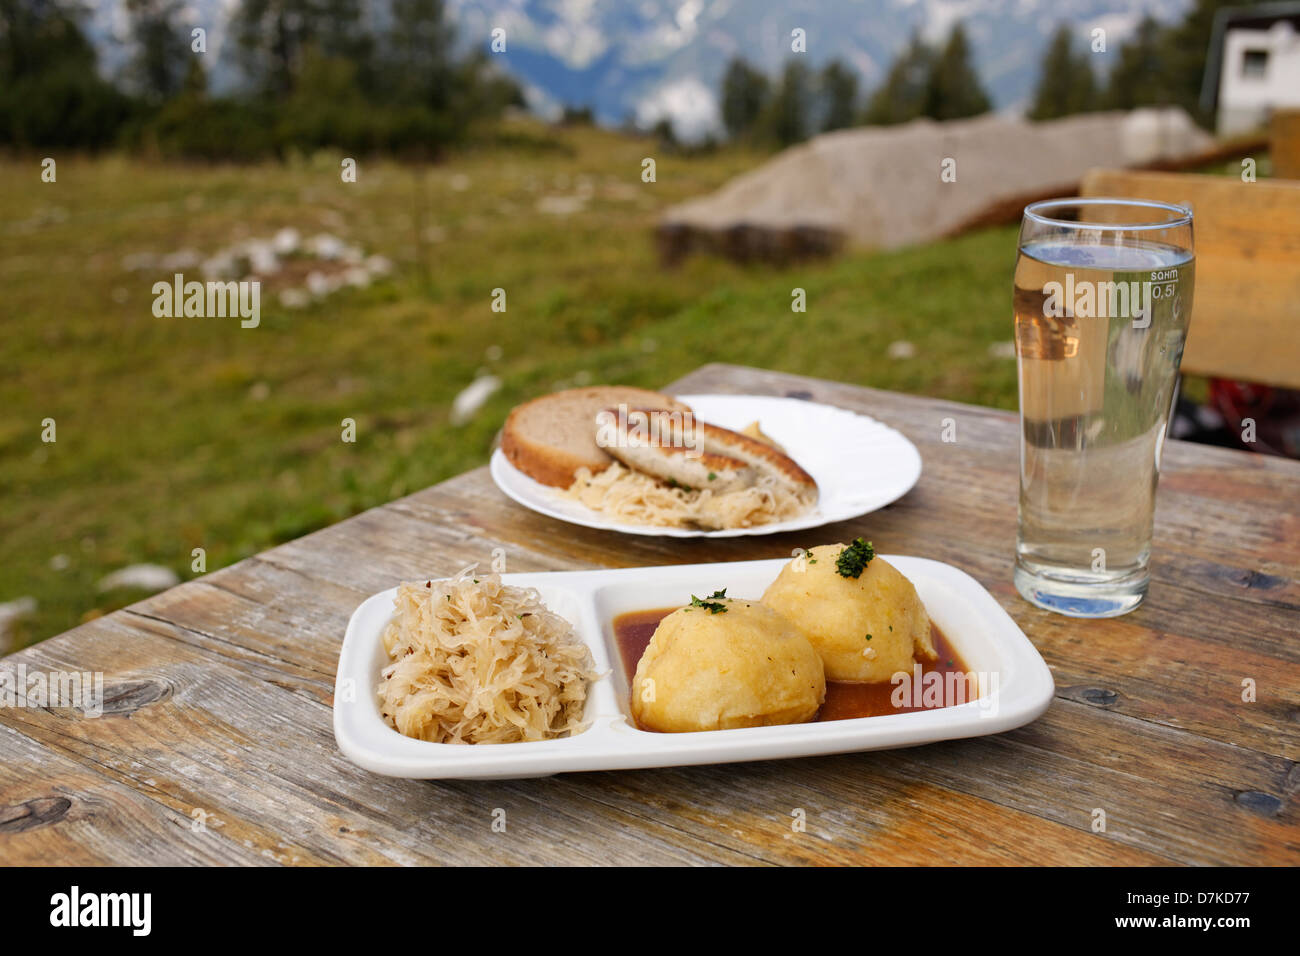 Austria, Upper Austria, Dumpling with sauerkraut and sausage Stock Photo